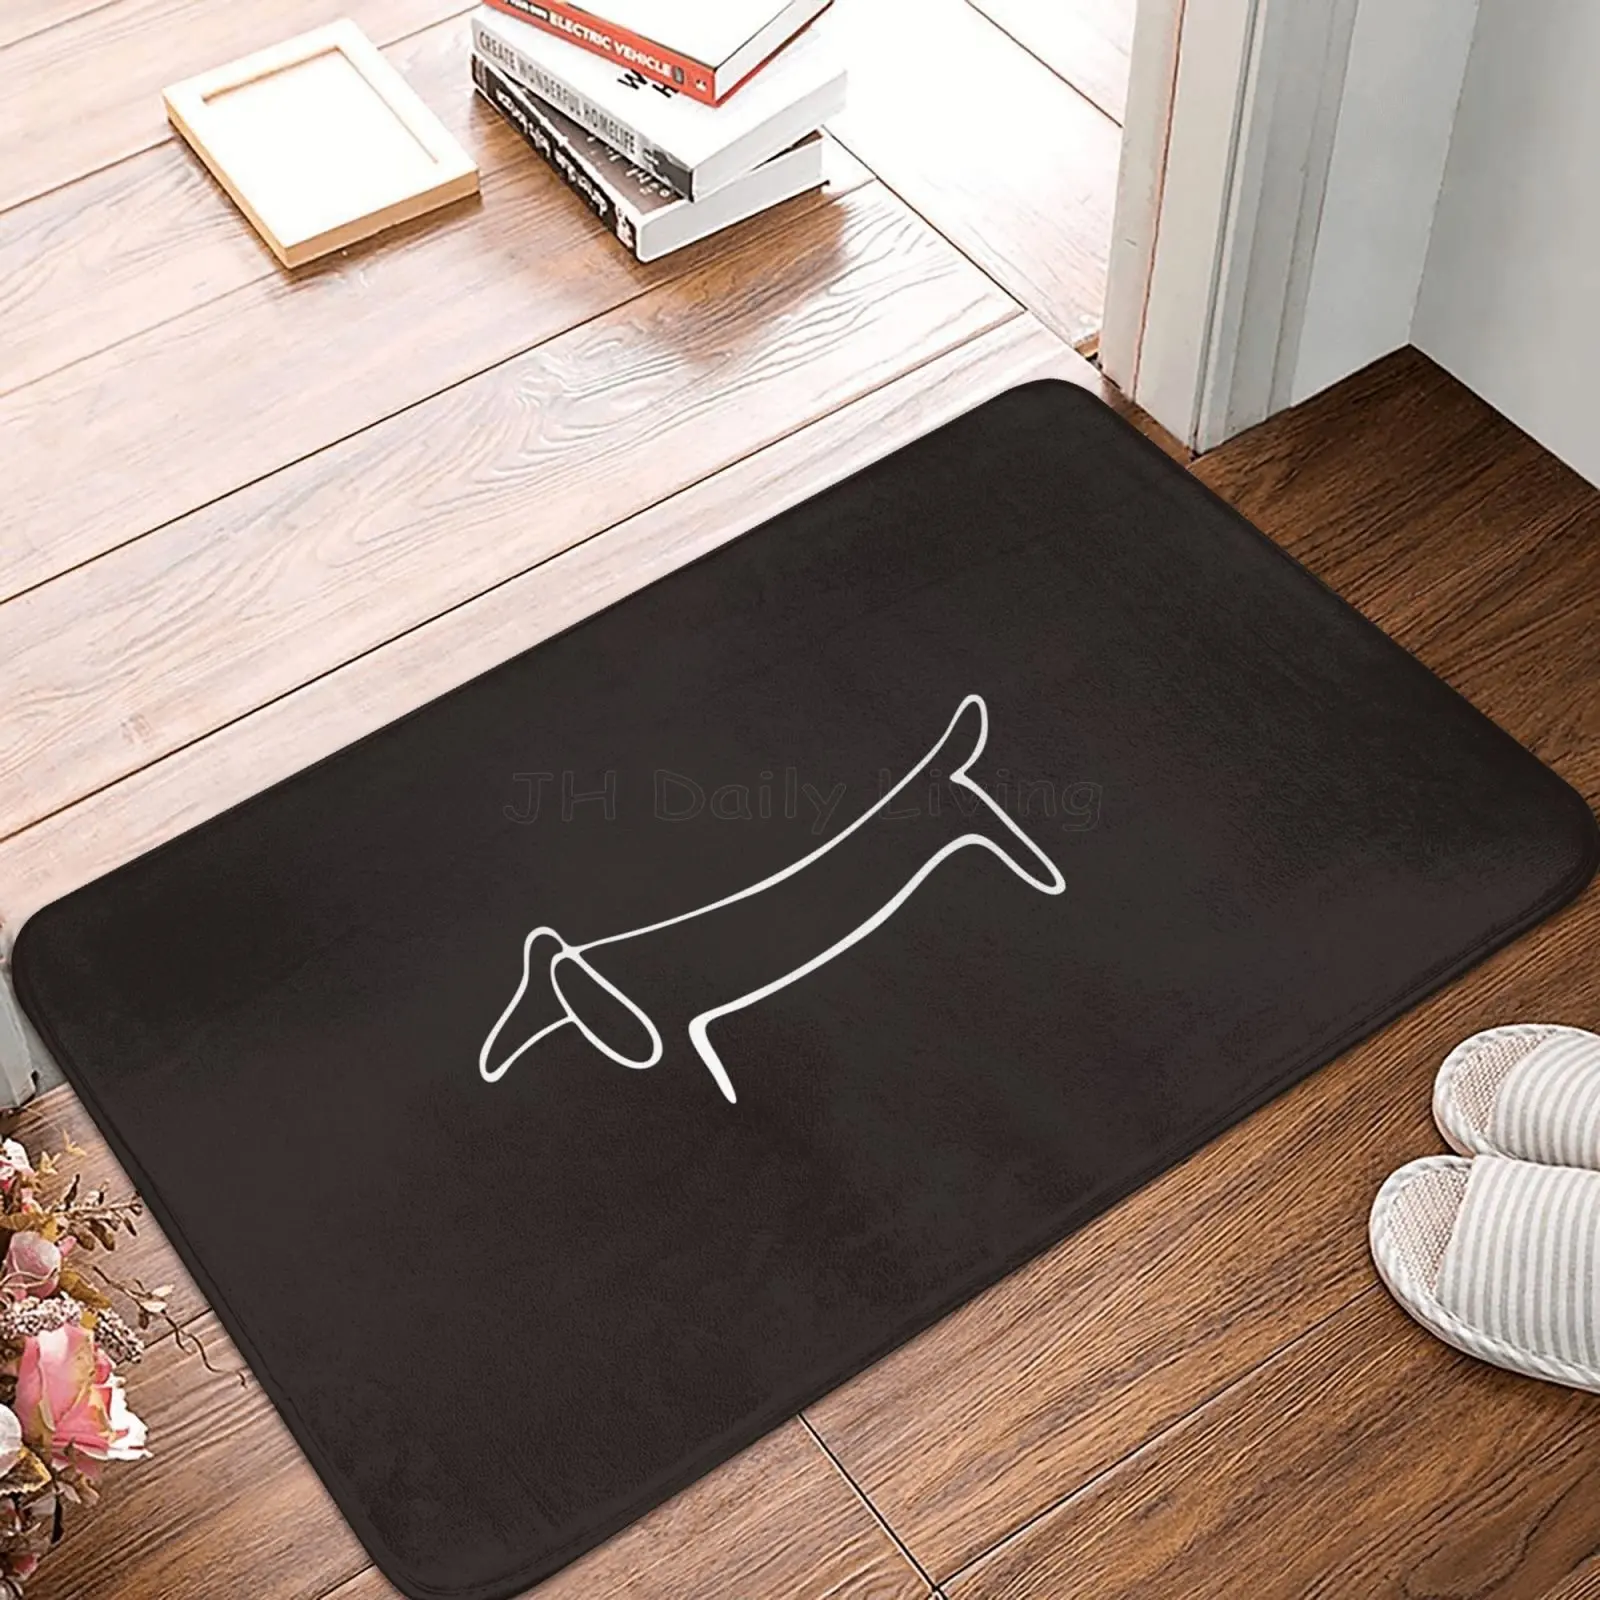 

Pablo Picasso Wild Wiener Dog Dachshund Doormat Rug Carpet Mat Footpad Non-slip Cushion Corridor Kitchen Bedroom Balcony Toilet